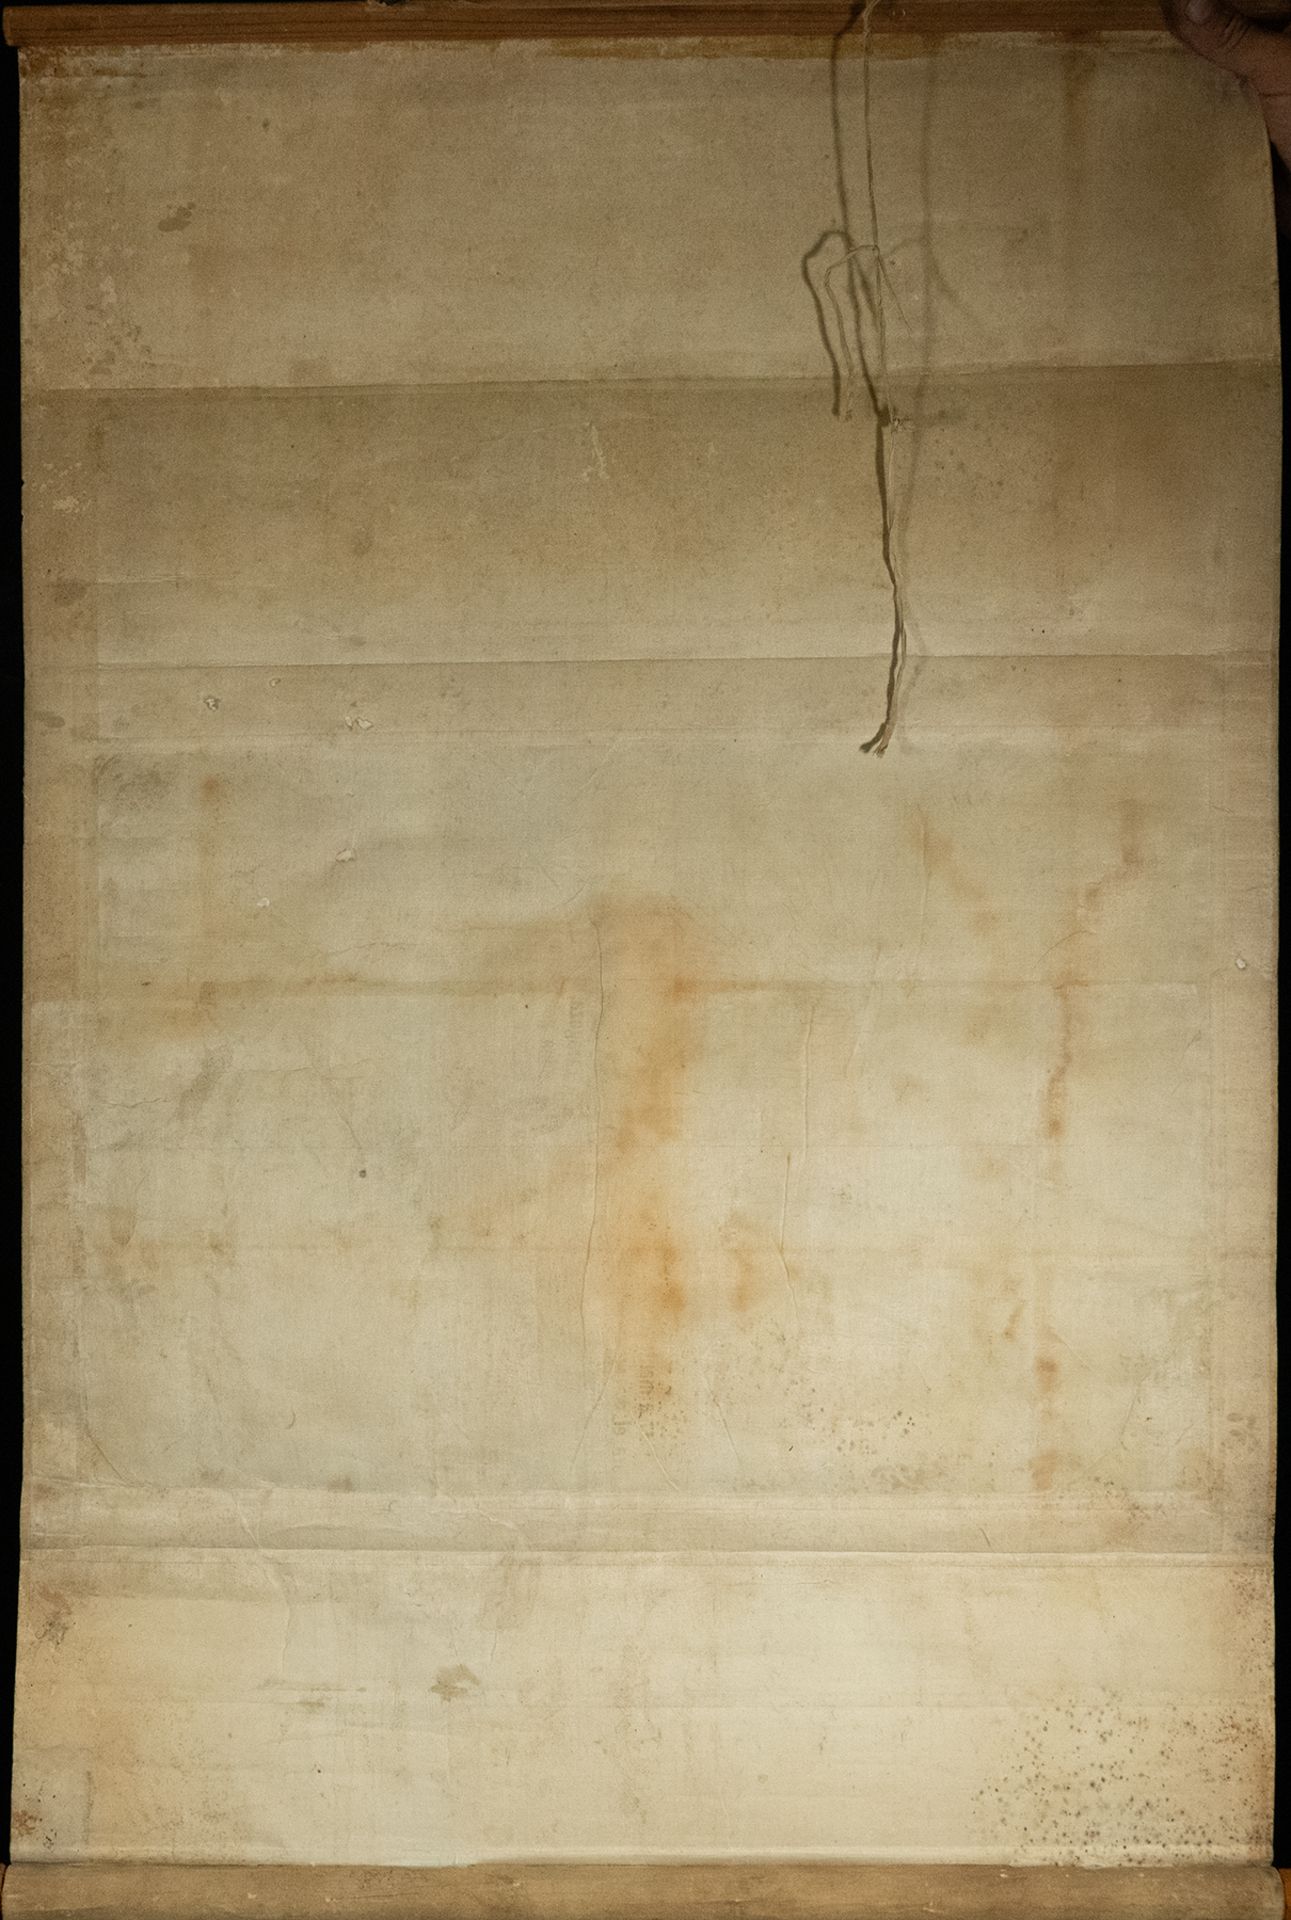 Foldout on Buddhist Temple Crane scroll, China, 19th century, sealed - Image 2 of 2